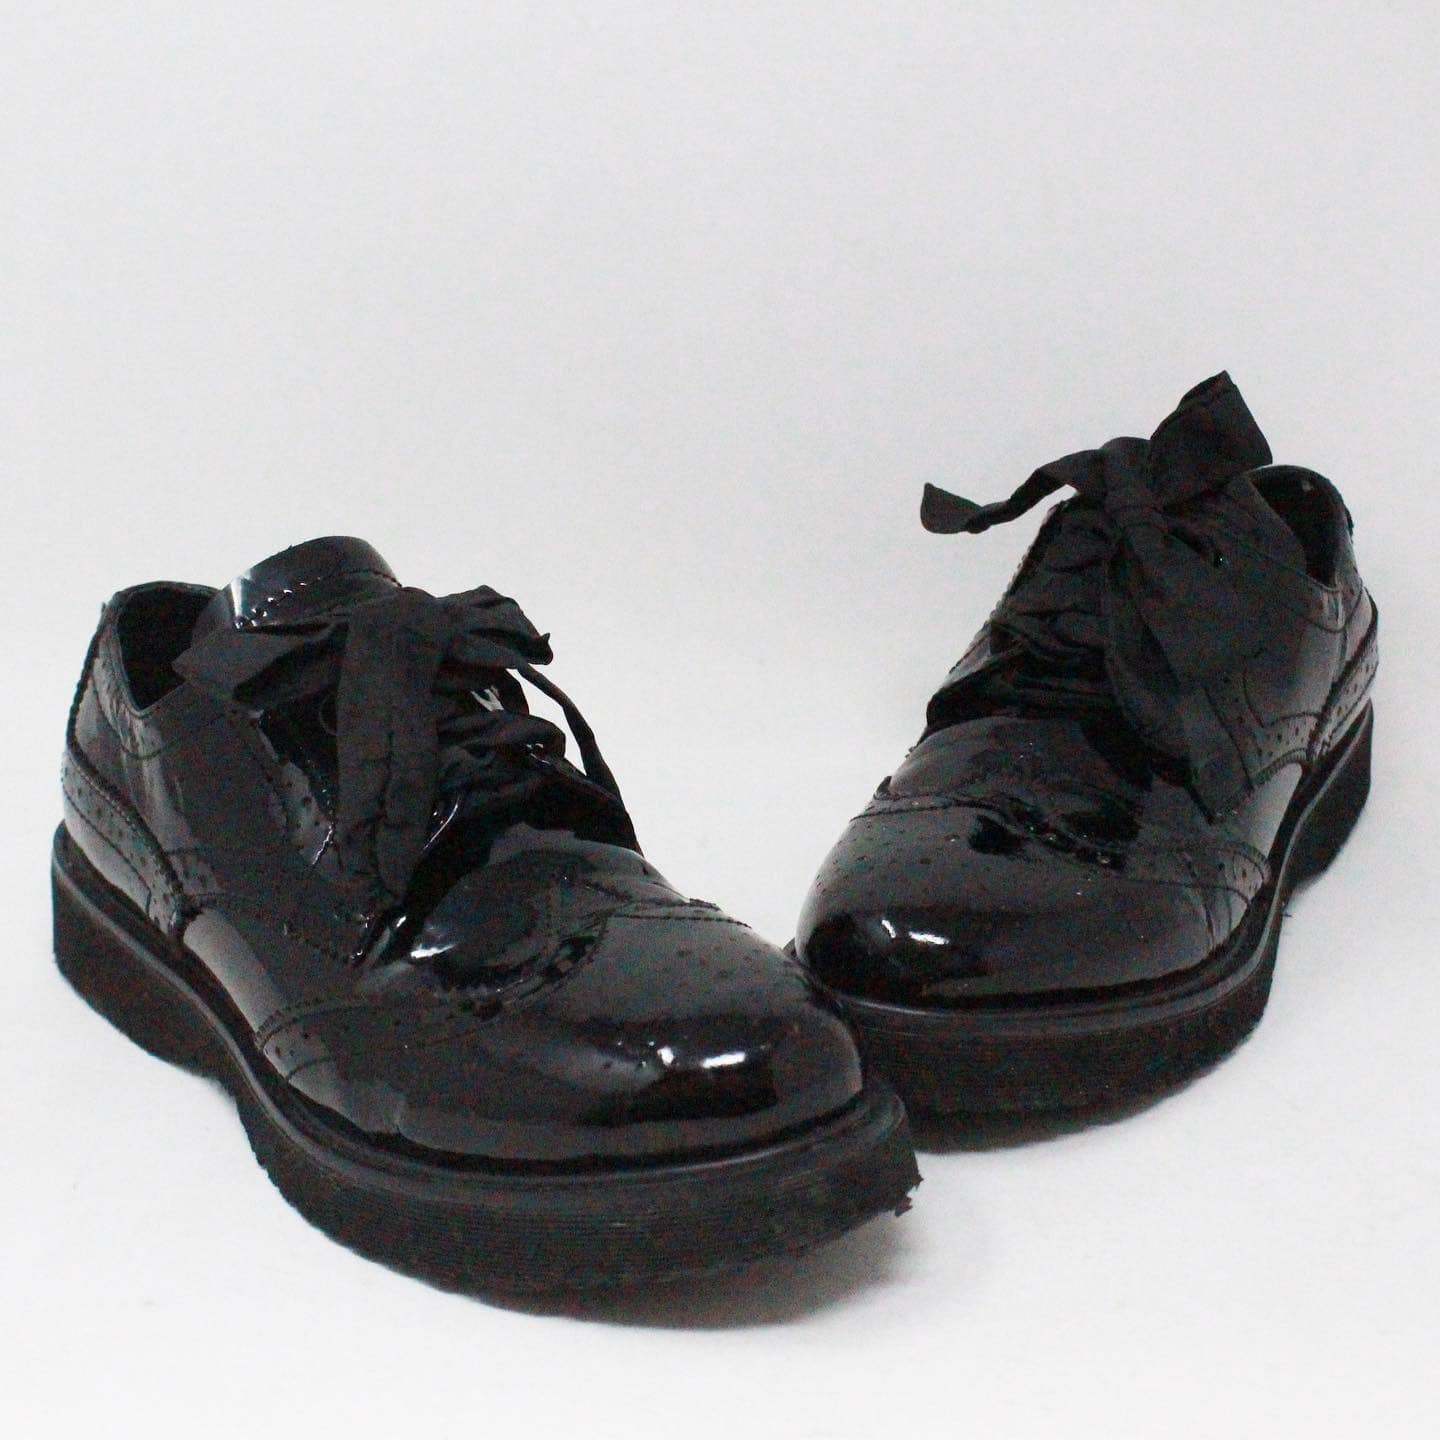 PRADA 38074 Black Patent Leather Shoes US 6 EU 36 a